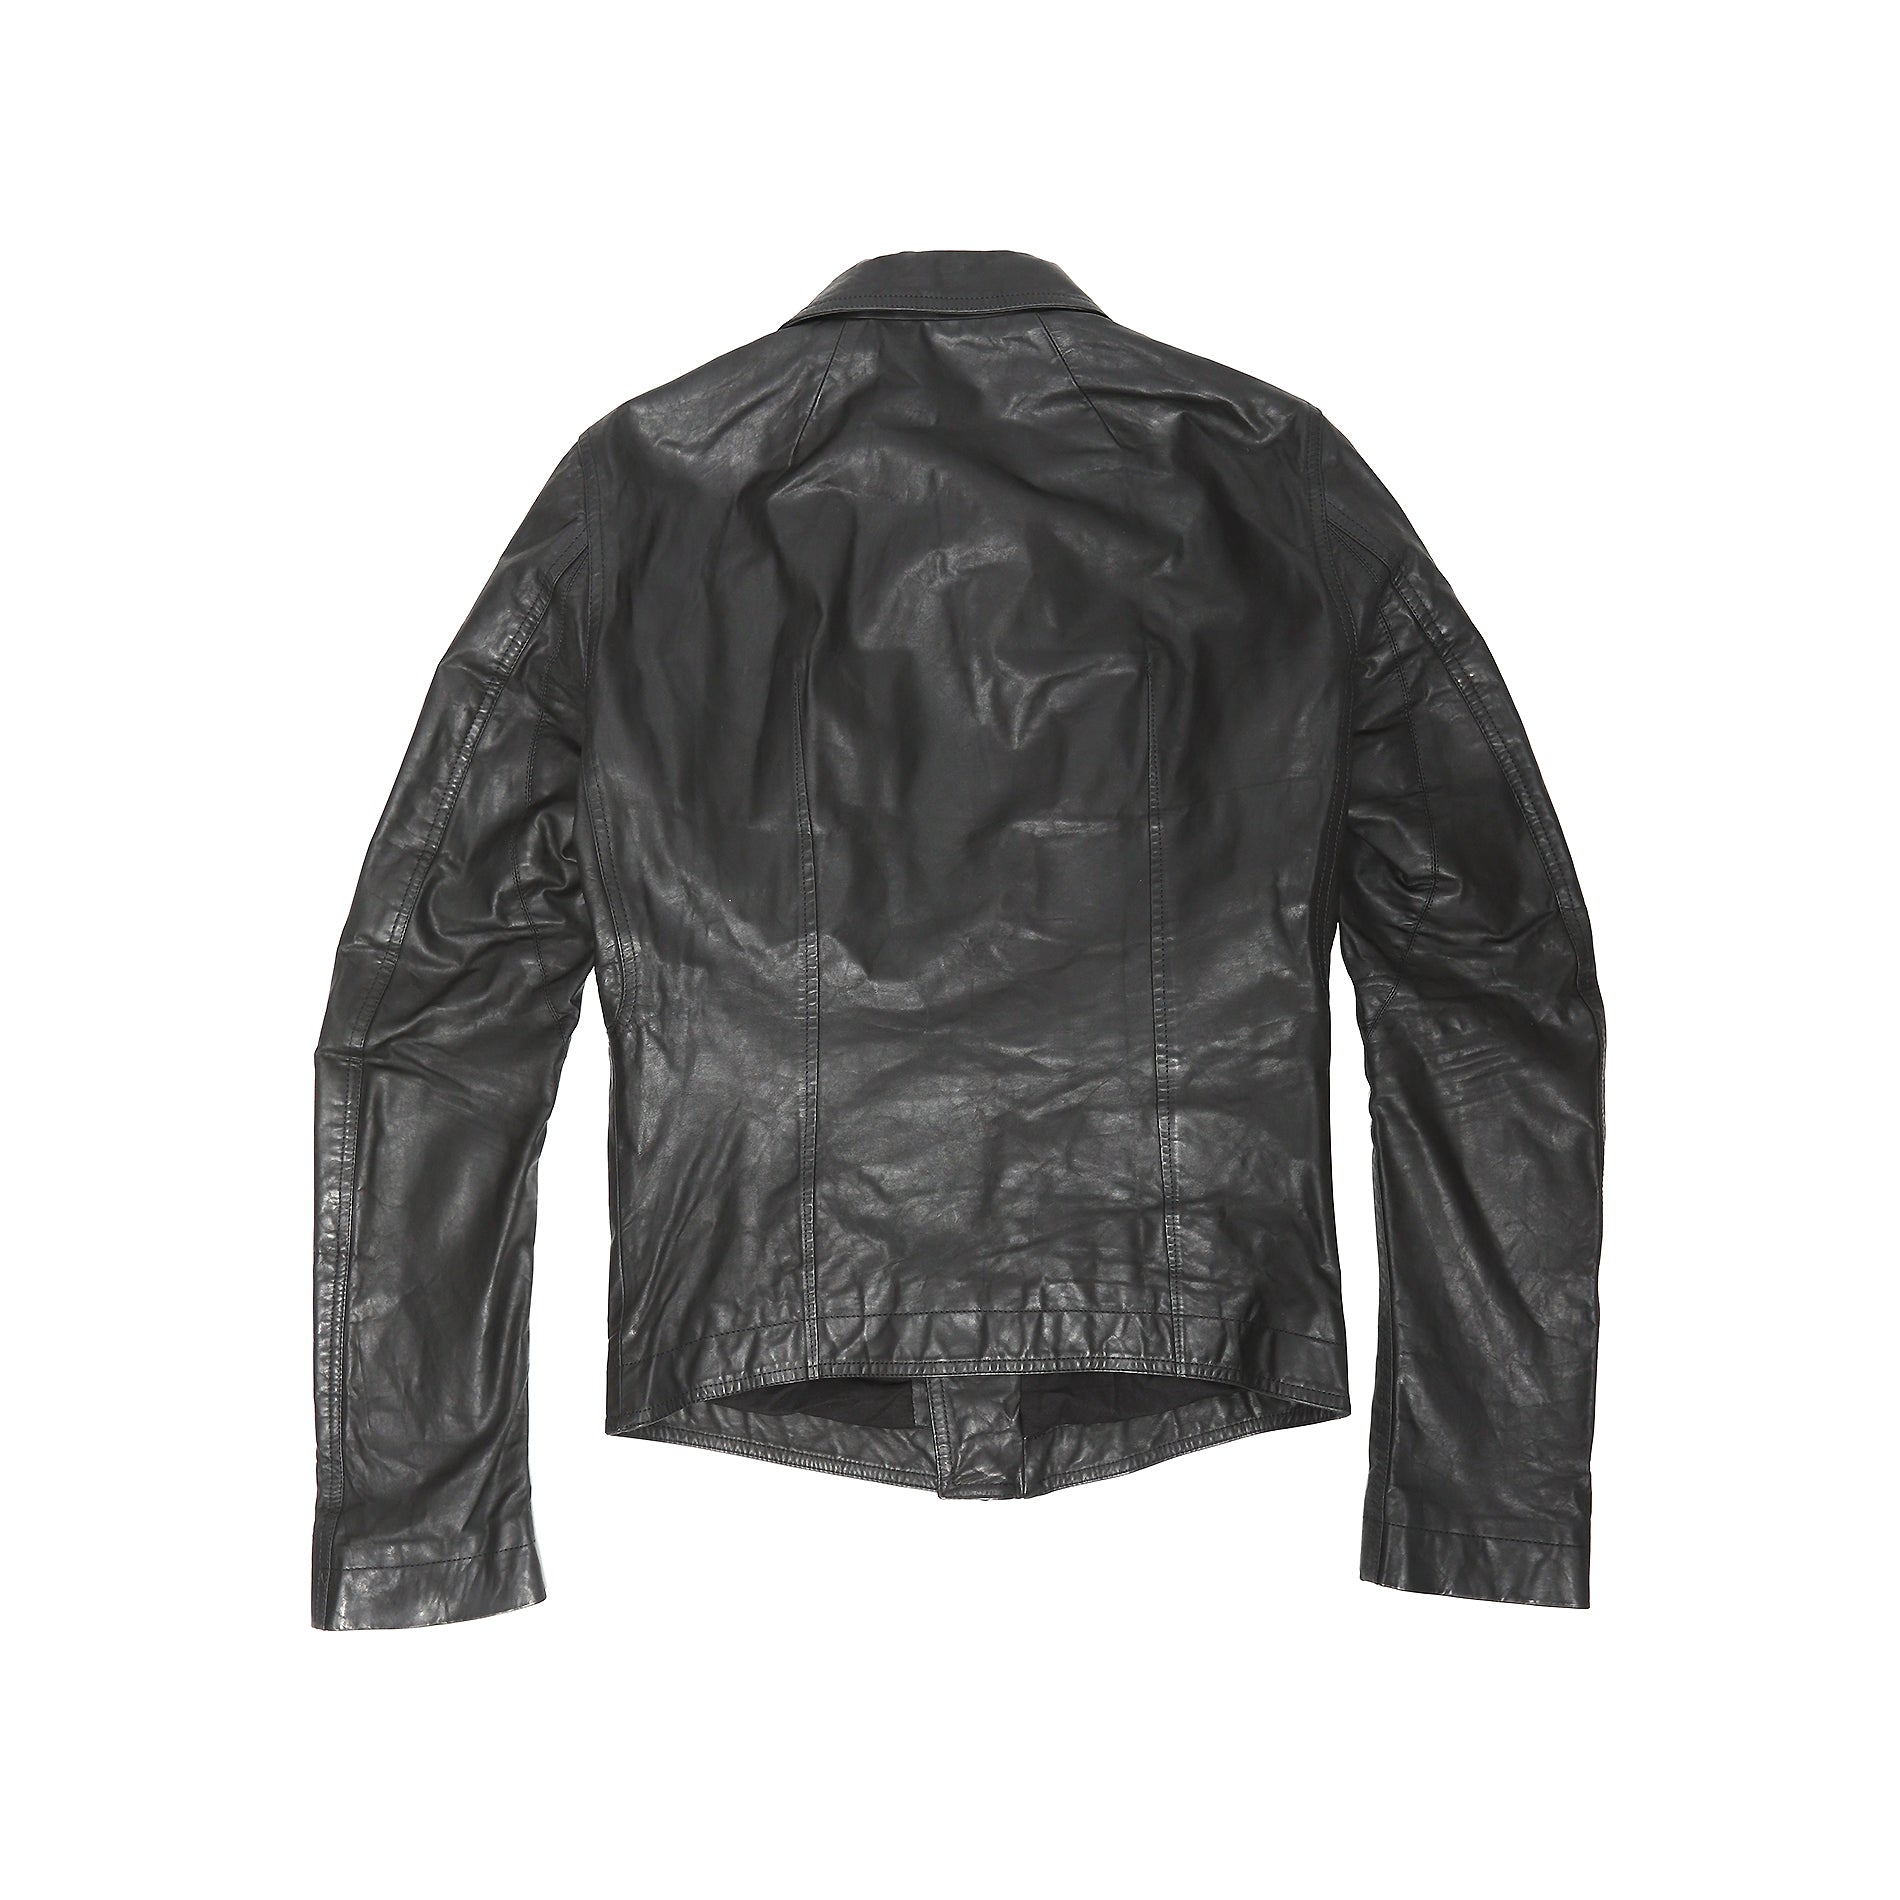 Rick Owens SS16 Washed Calf Multi-Zip Leather Jacket - Ākaibu Store